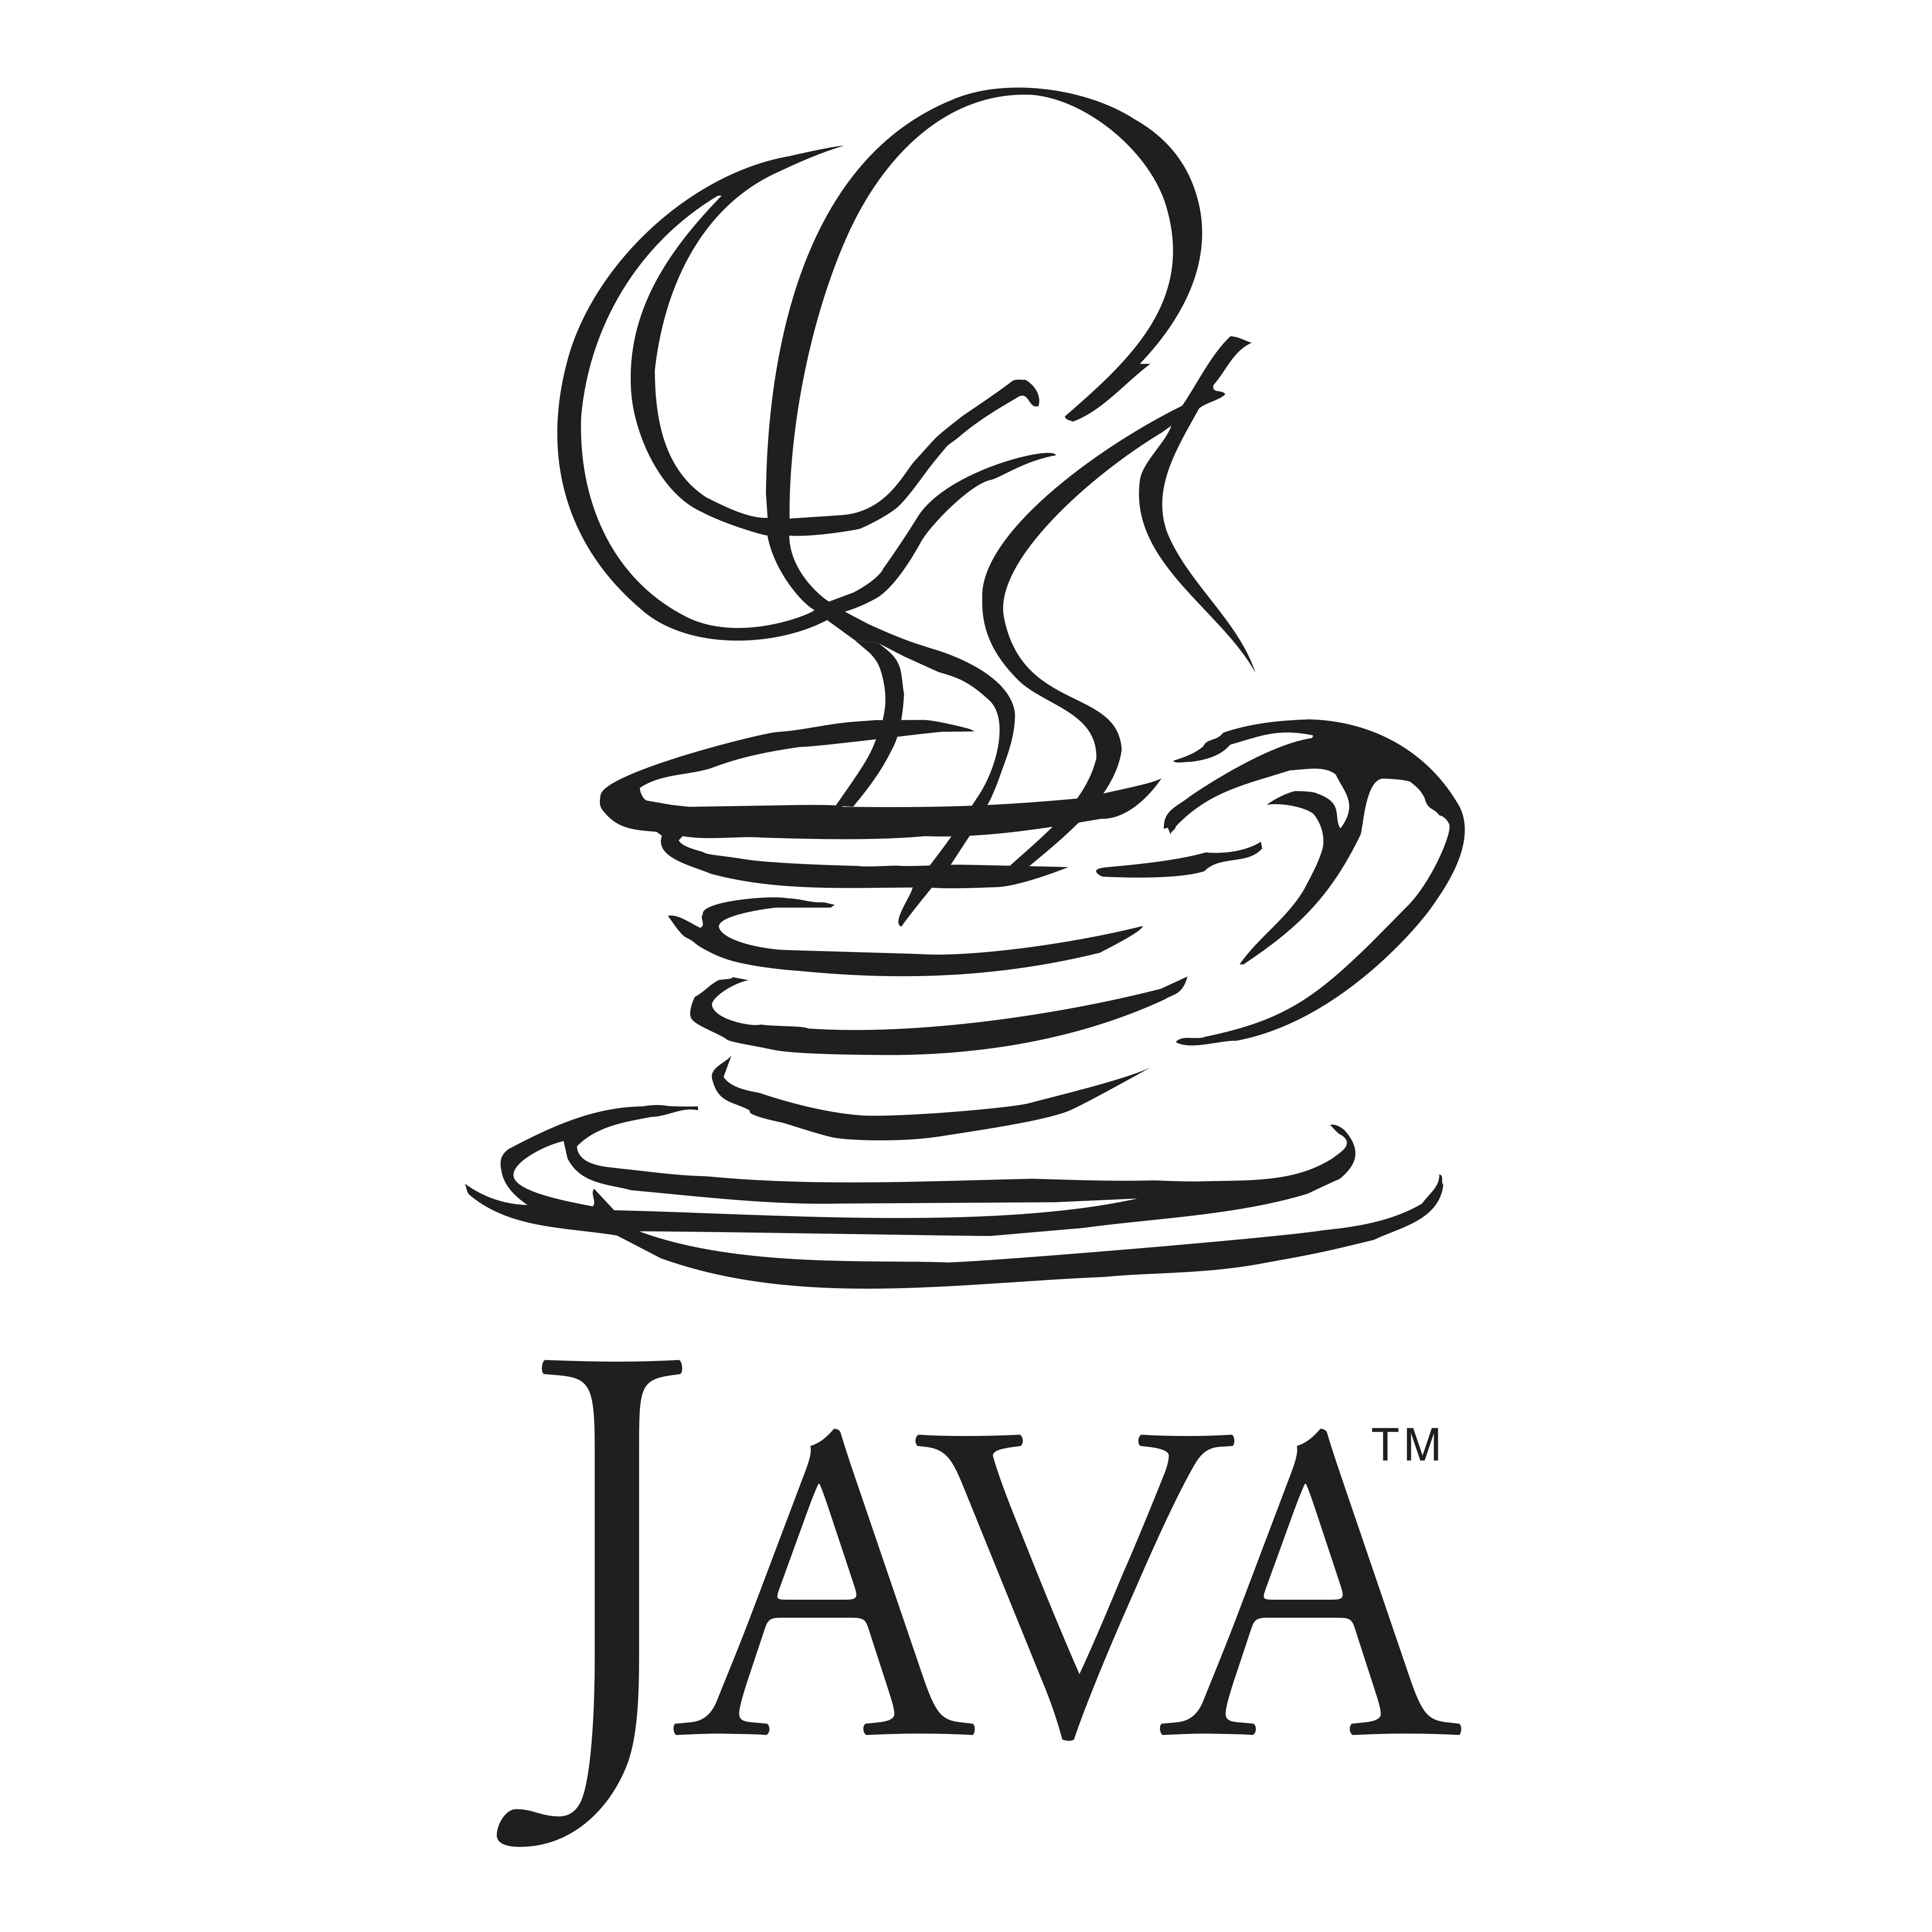 A Crash Course on Java Web Application Development - Webskitters Academy